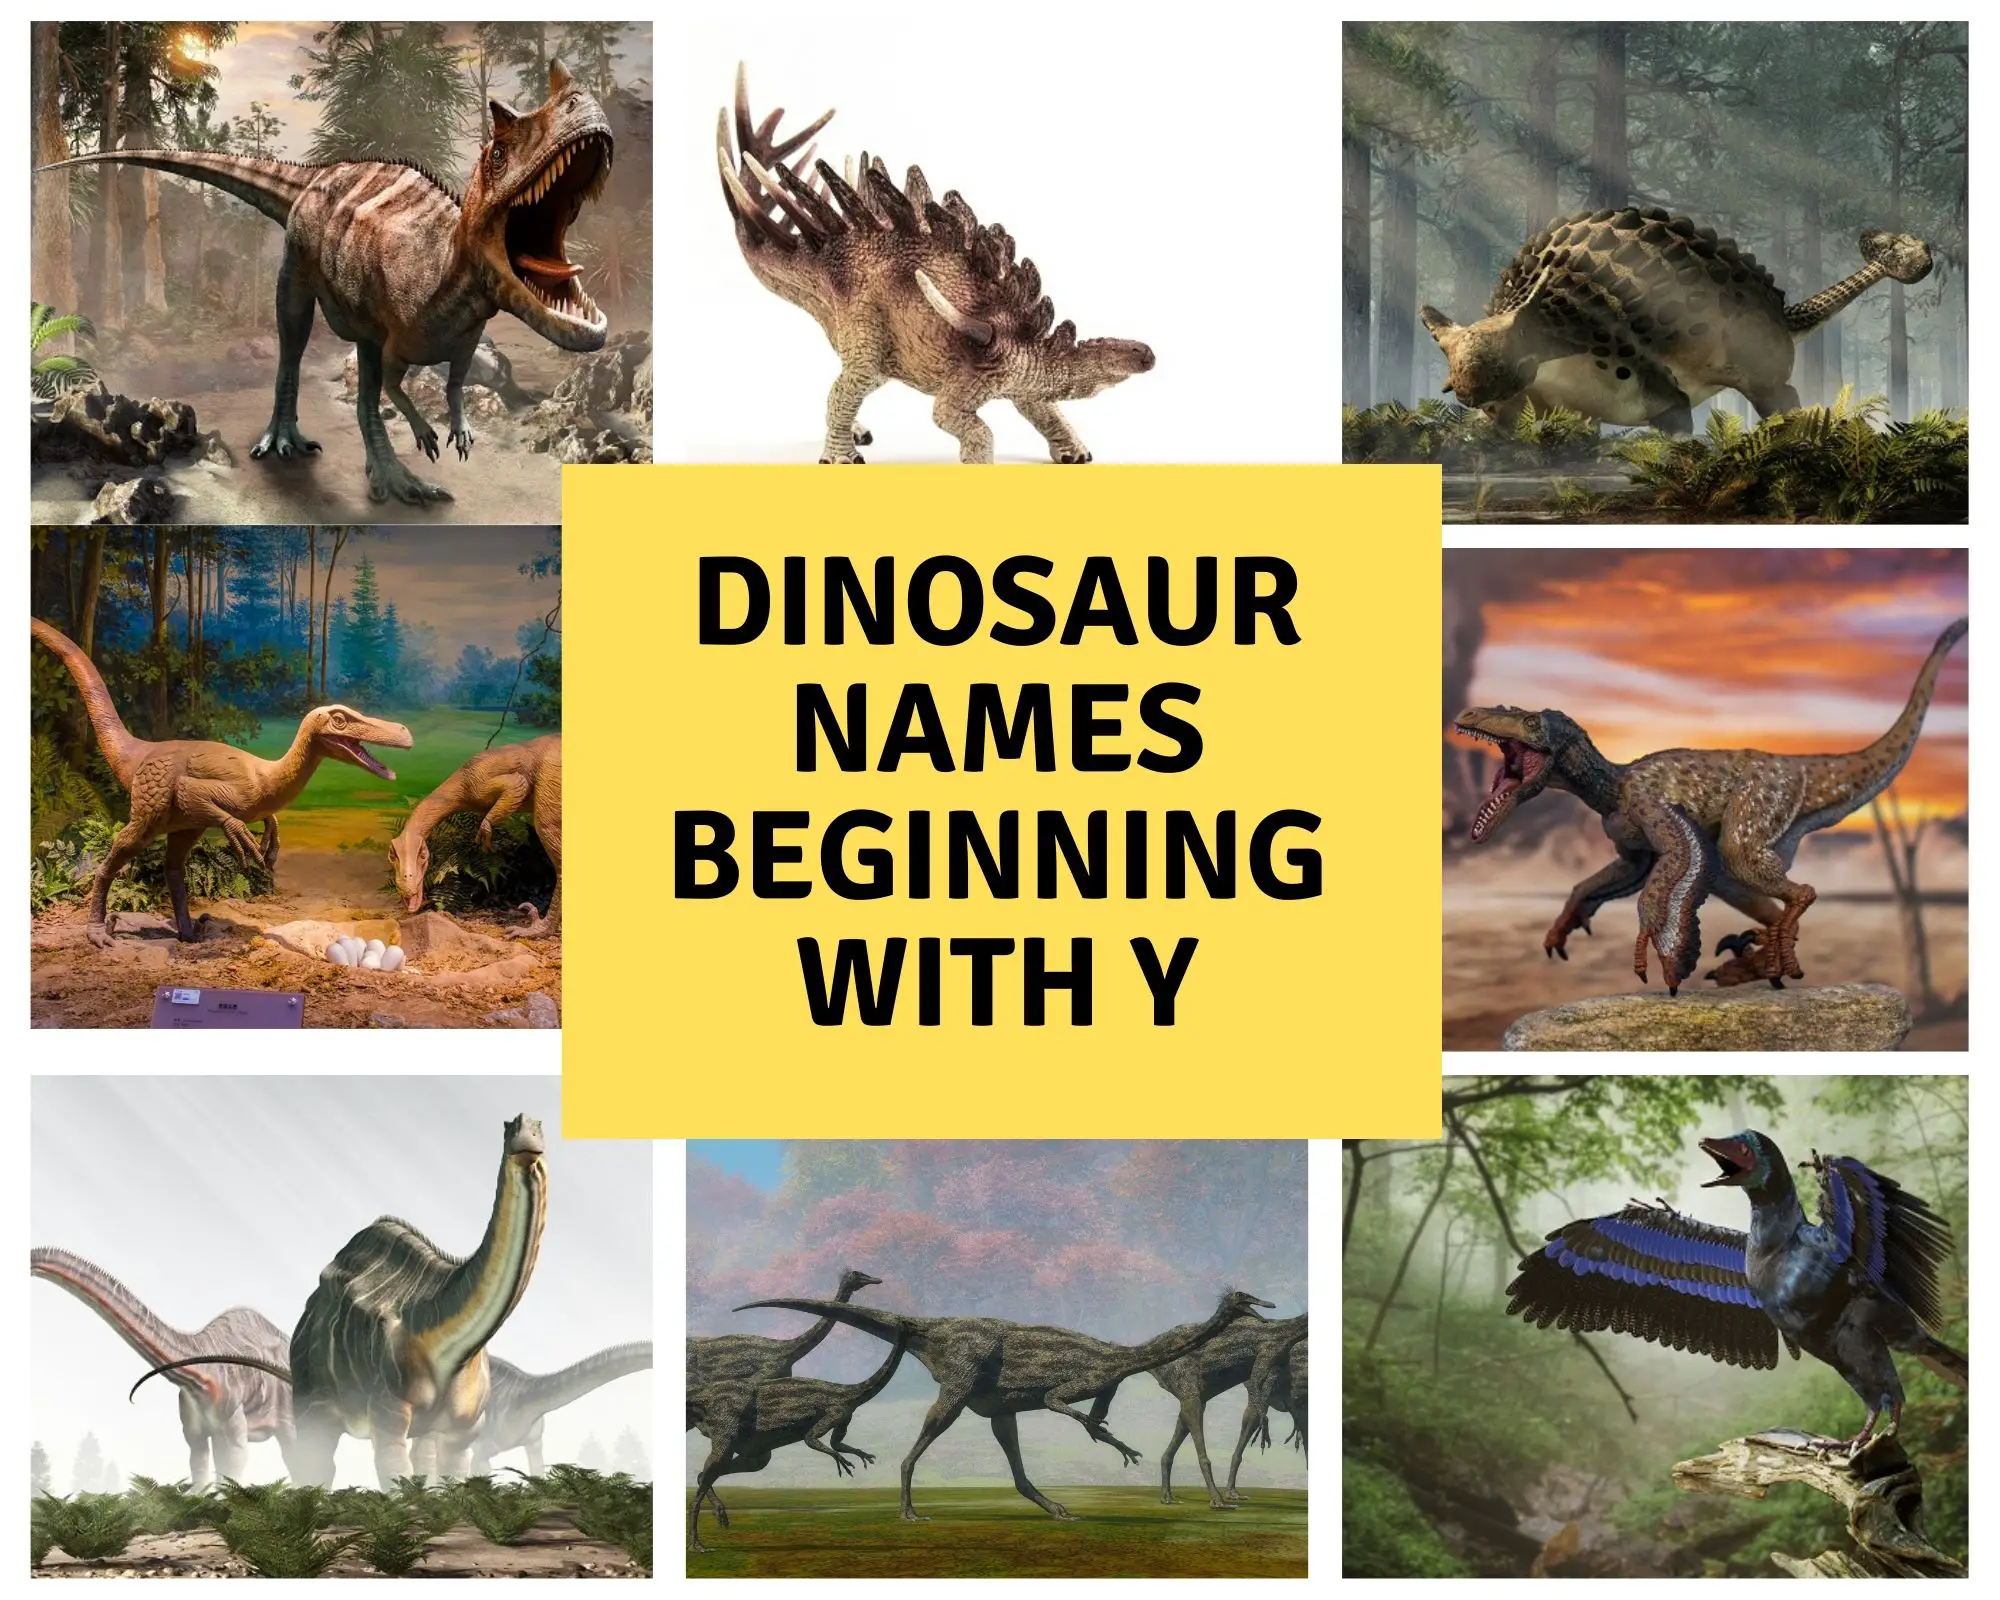 Dinosaur names beginning with Y